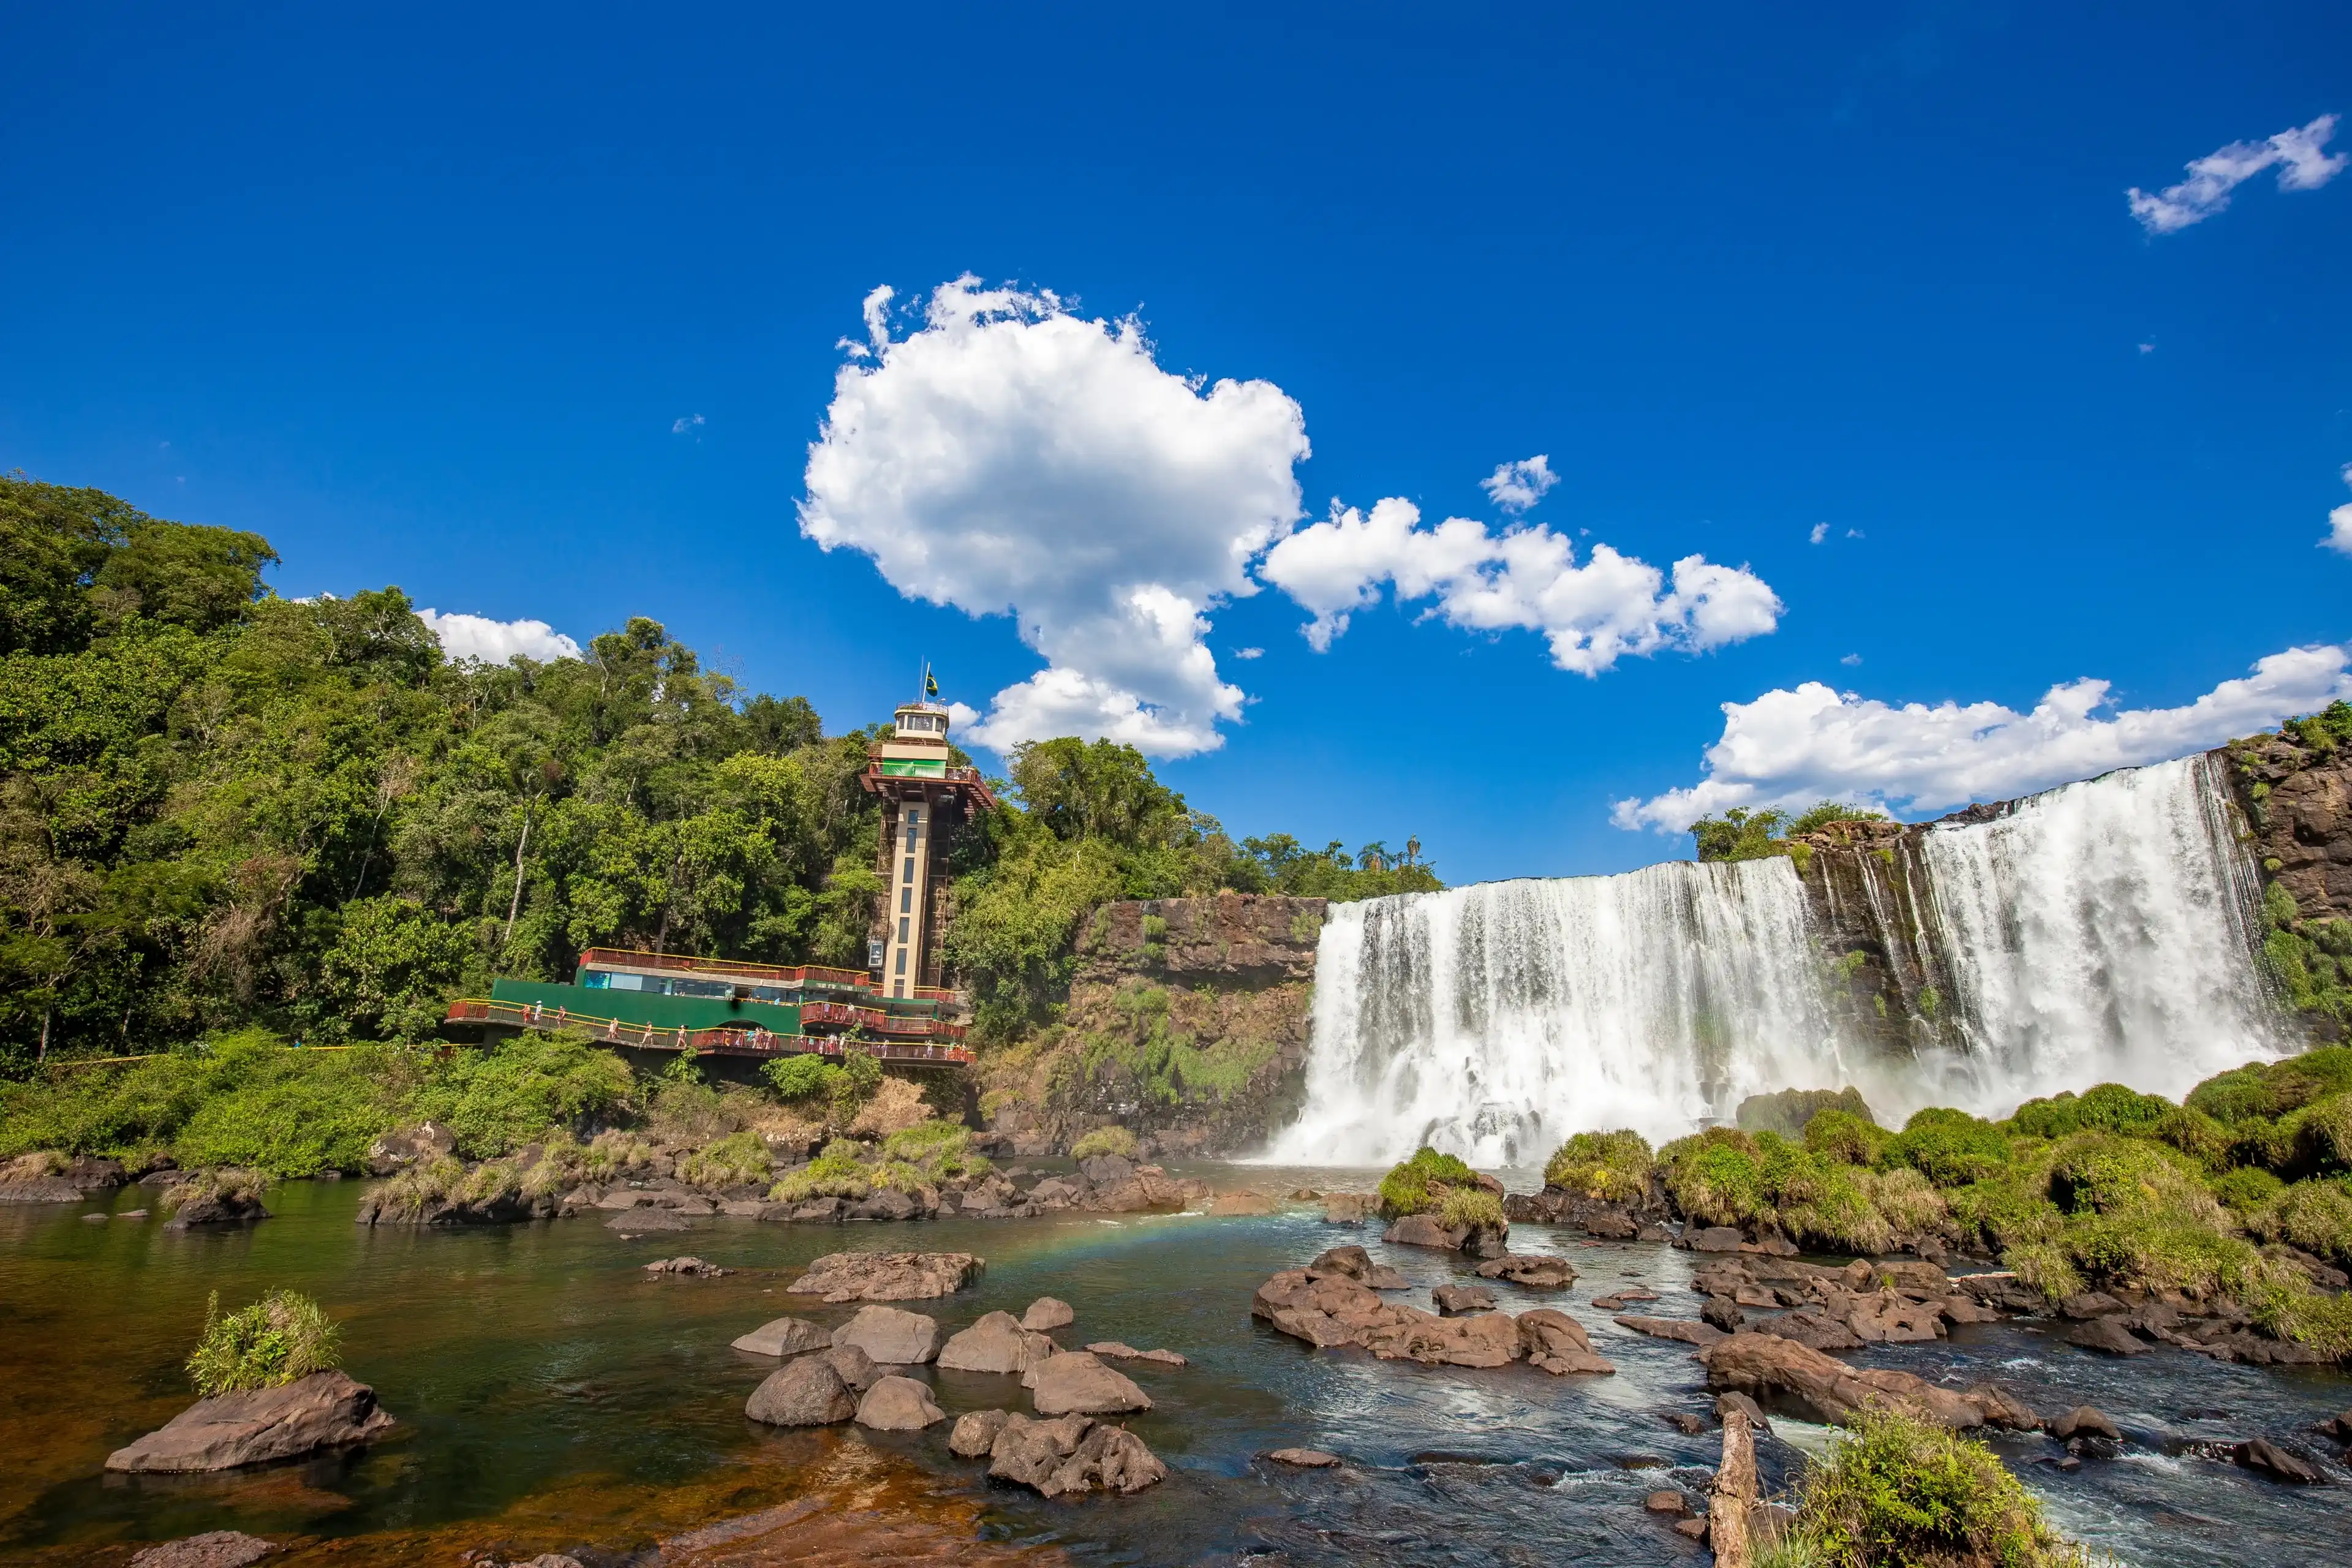 Best Foz do Iguaçu hotels. Cheap hotels in Foz do Iguaçu, Brazil